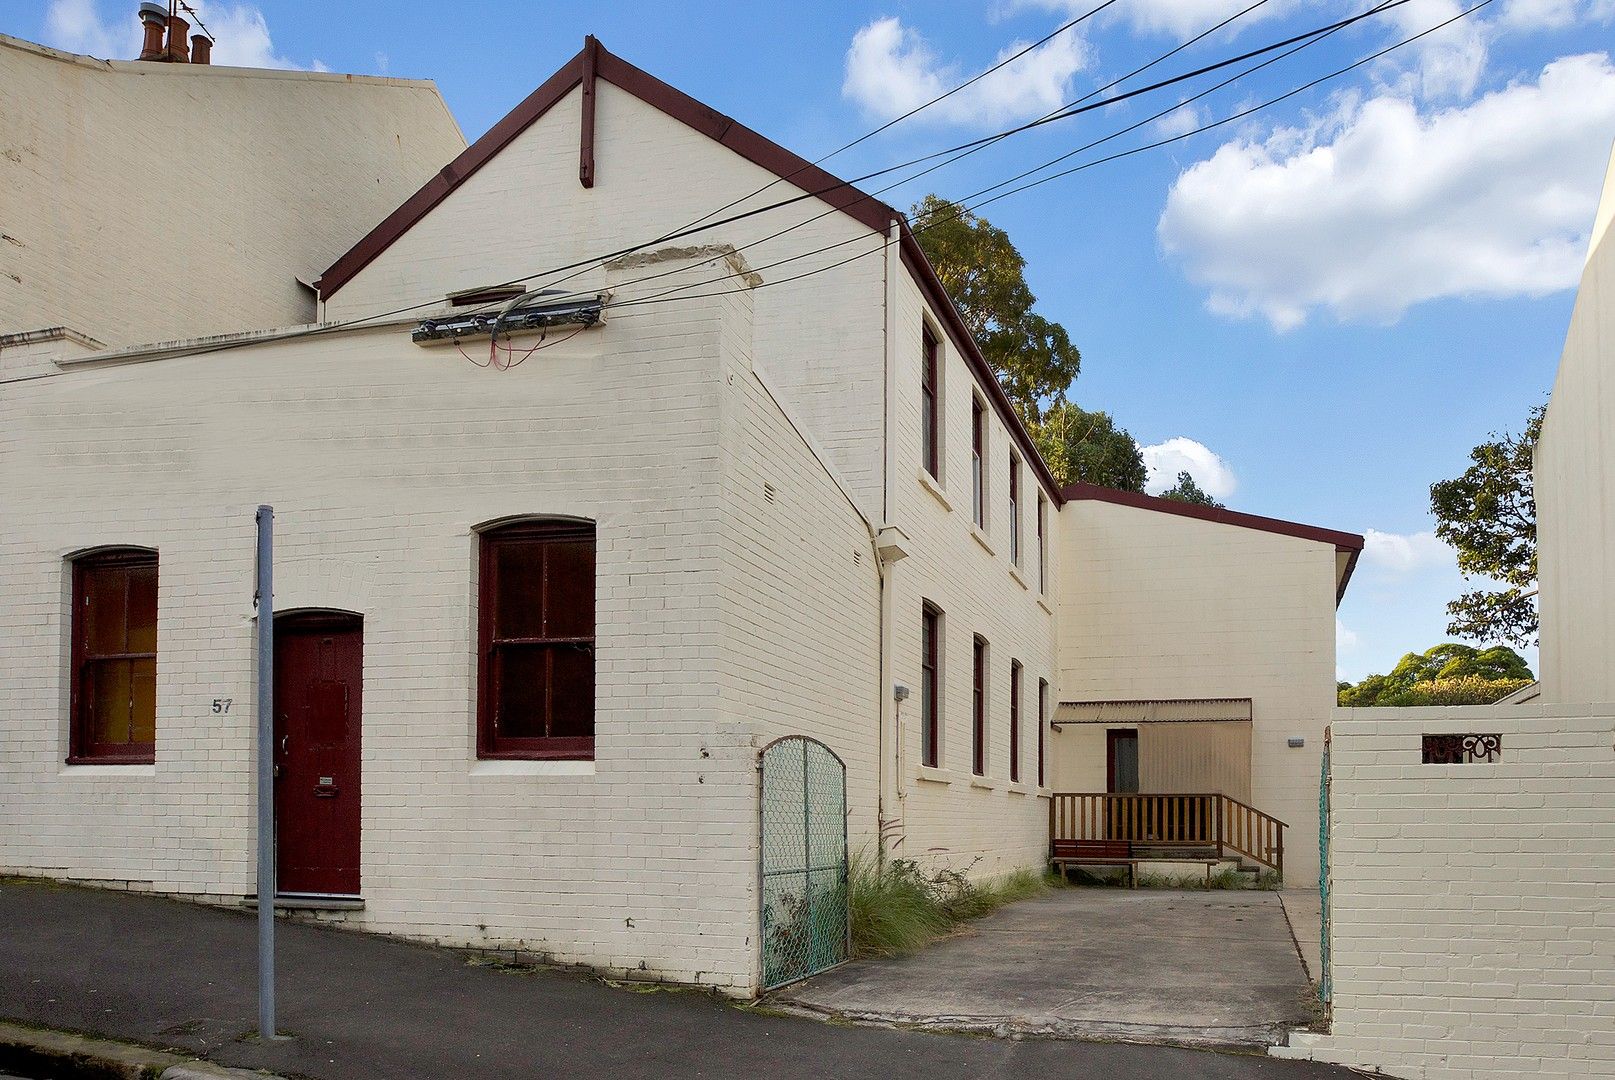 1 bedrooms House in 57 Nelson Street ROZELLE NSW, 2039